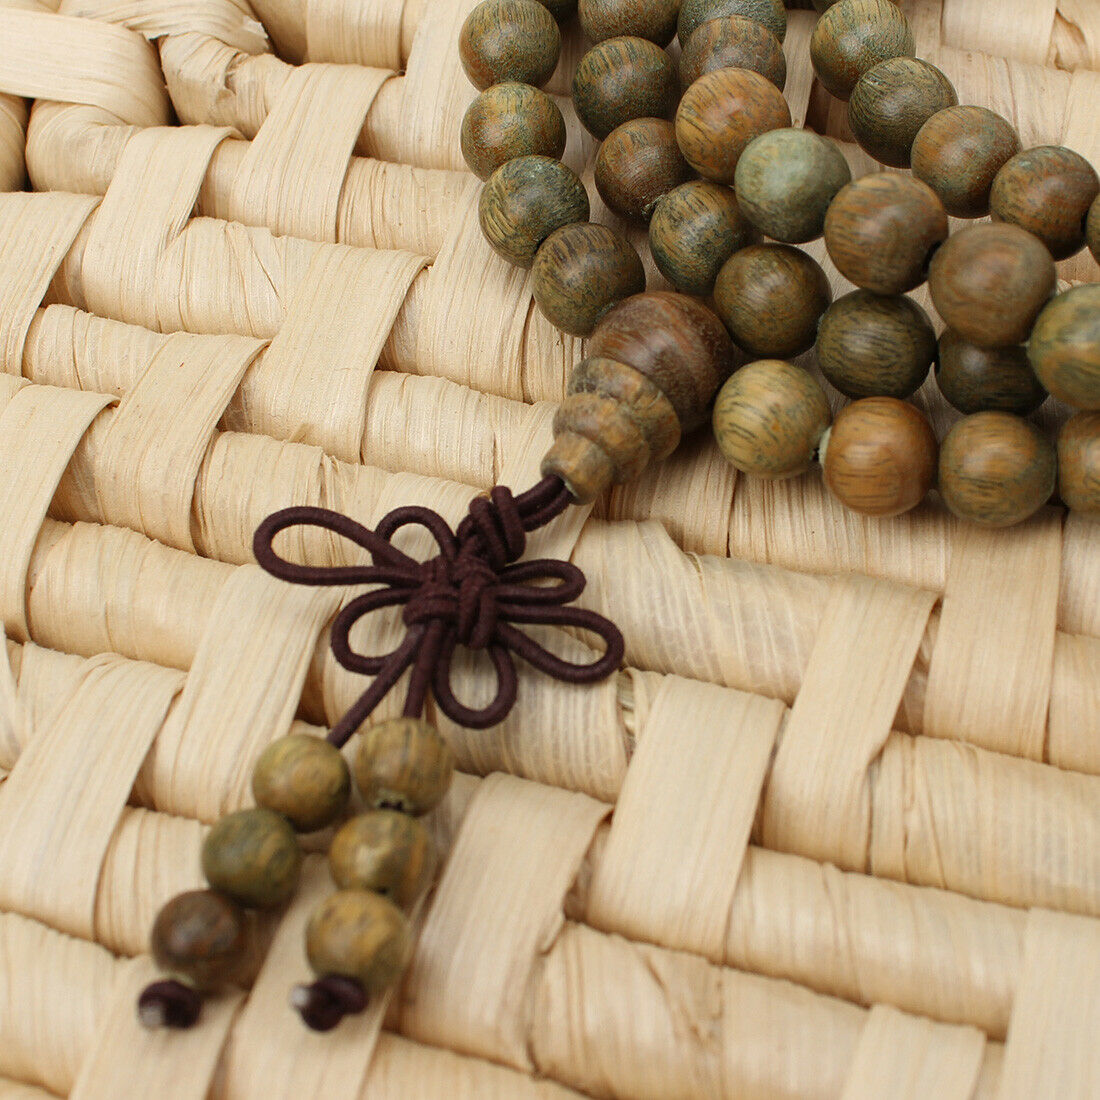 108pcs 8mm Fragrant Green Beads Sandalwood Buddhist Prayer Necklace/Bracelet